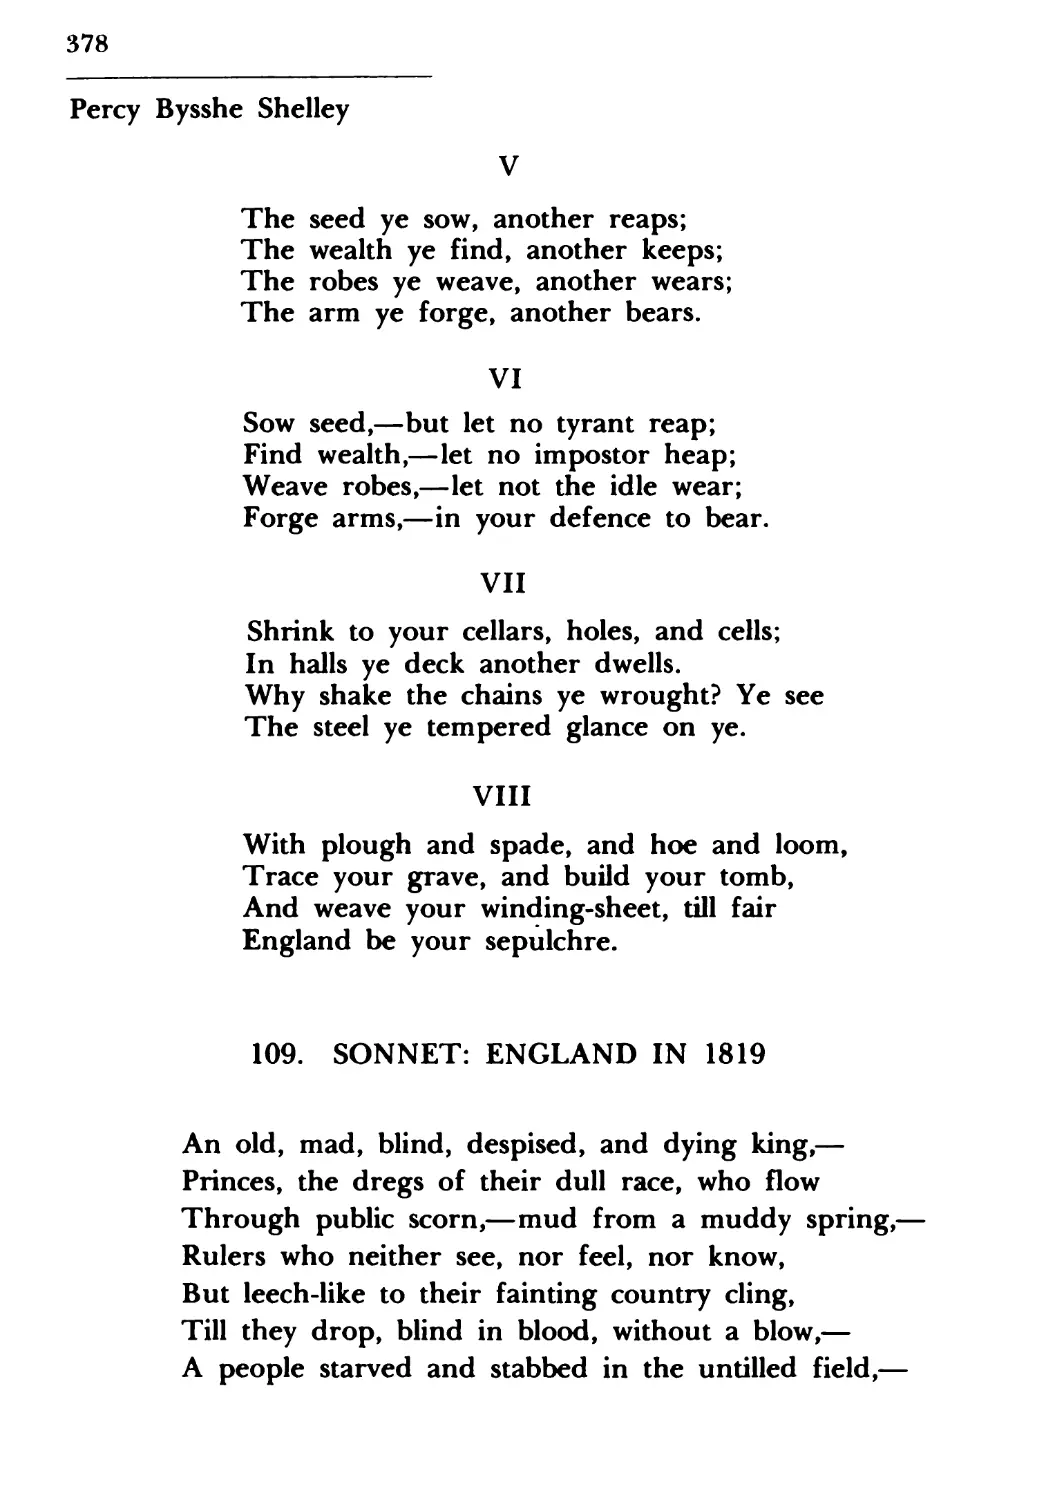 109. Sonnet: England in 1819